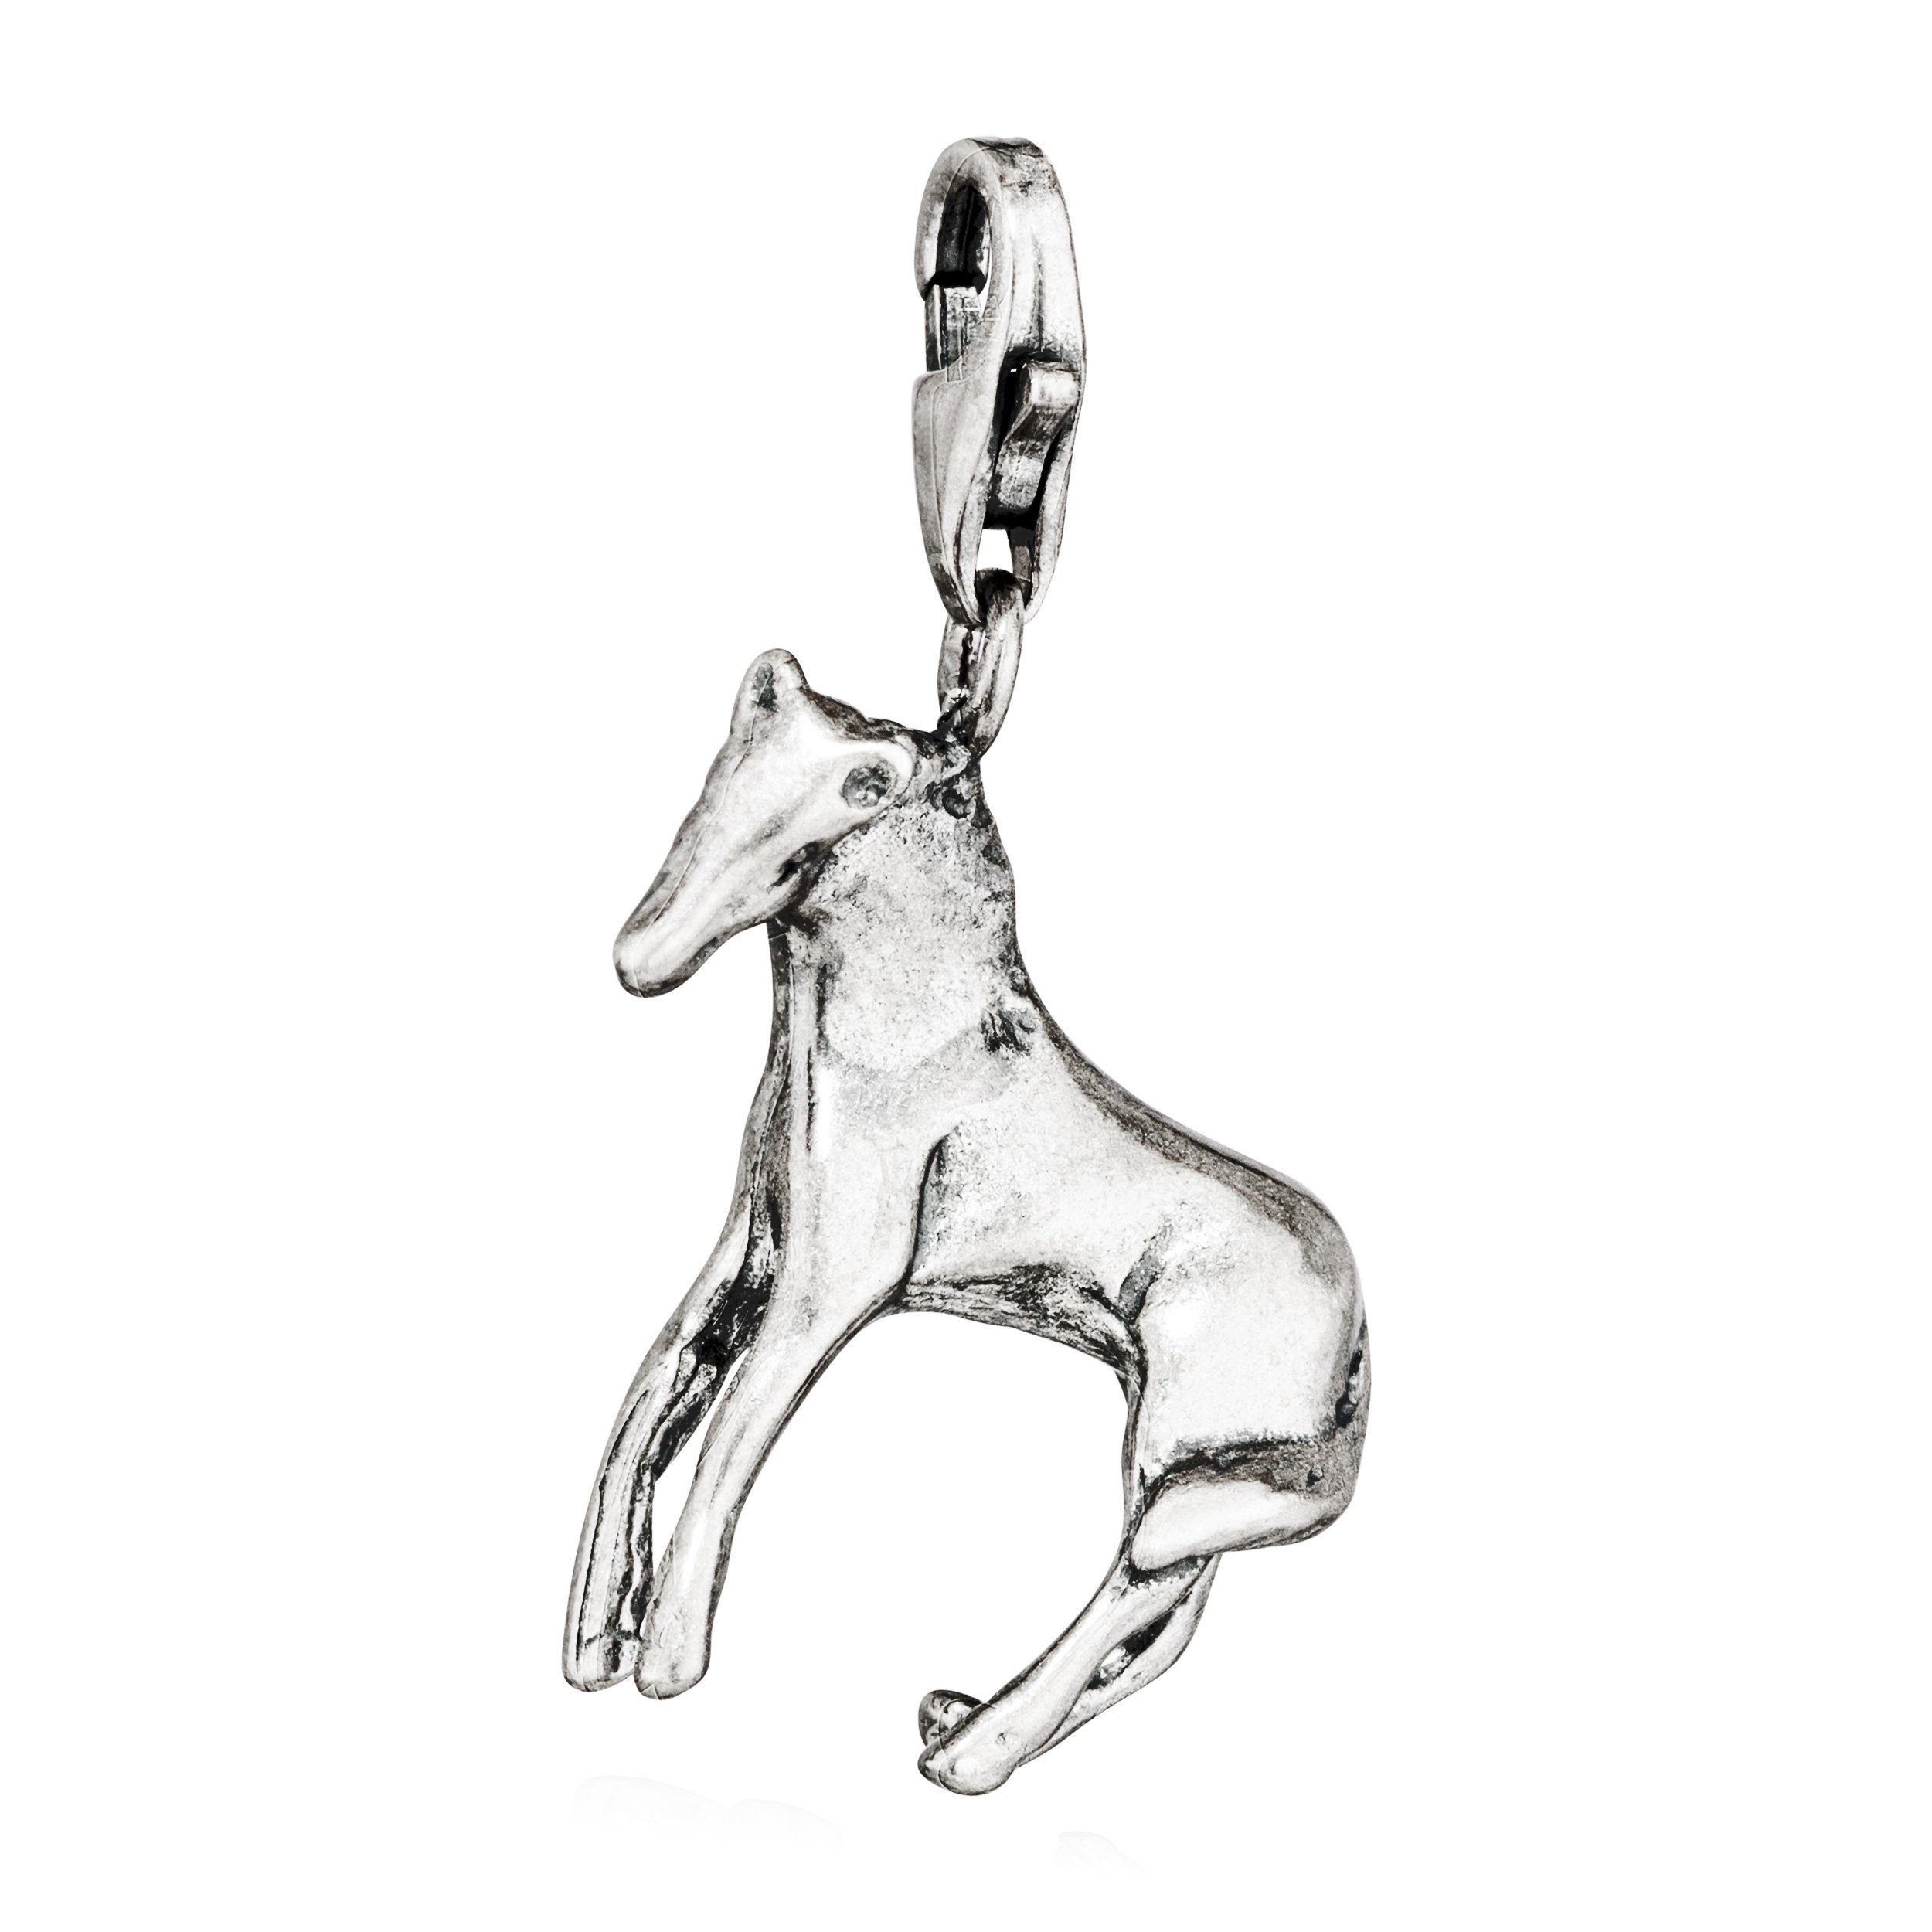 NKlaus Kettenanhänger Charm-Anhänger Pferd 925 Silber antik 20x18mm Silberanhänger Amulett T